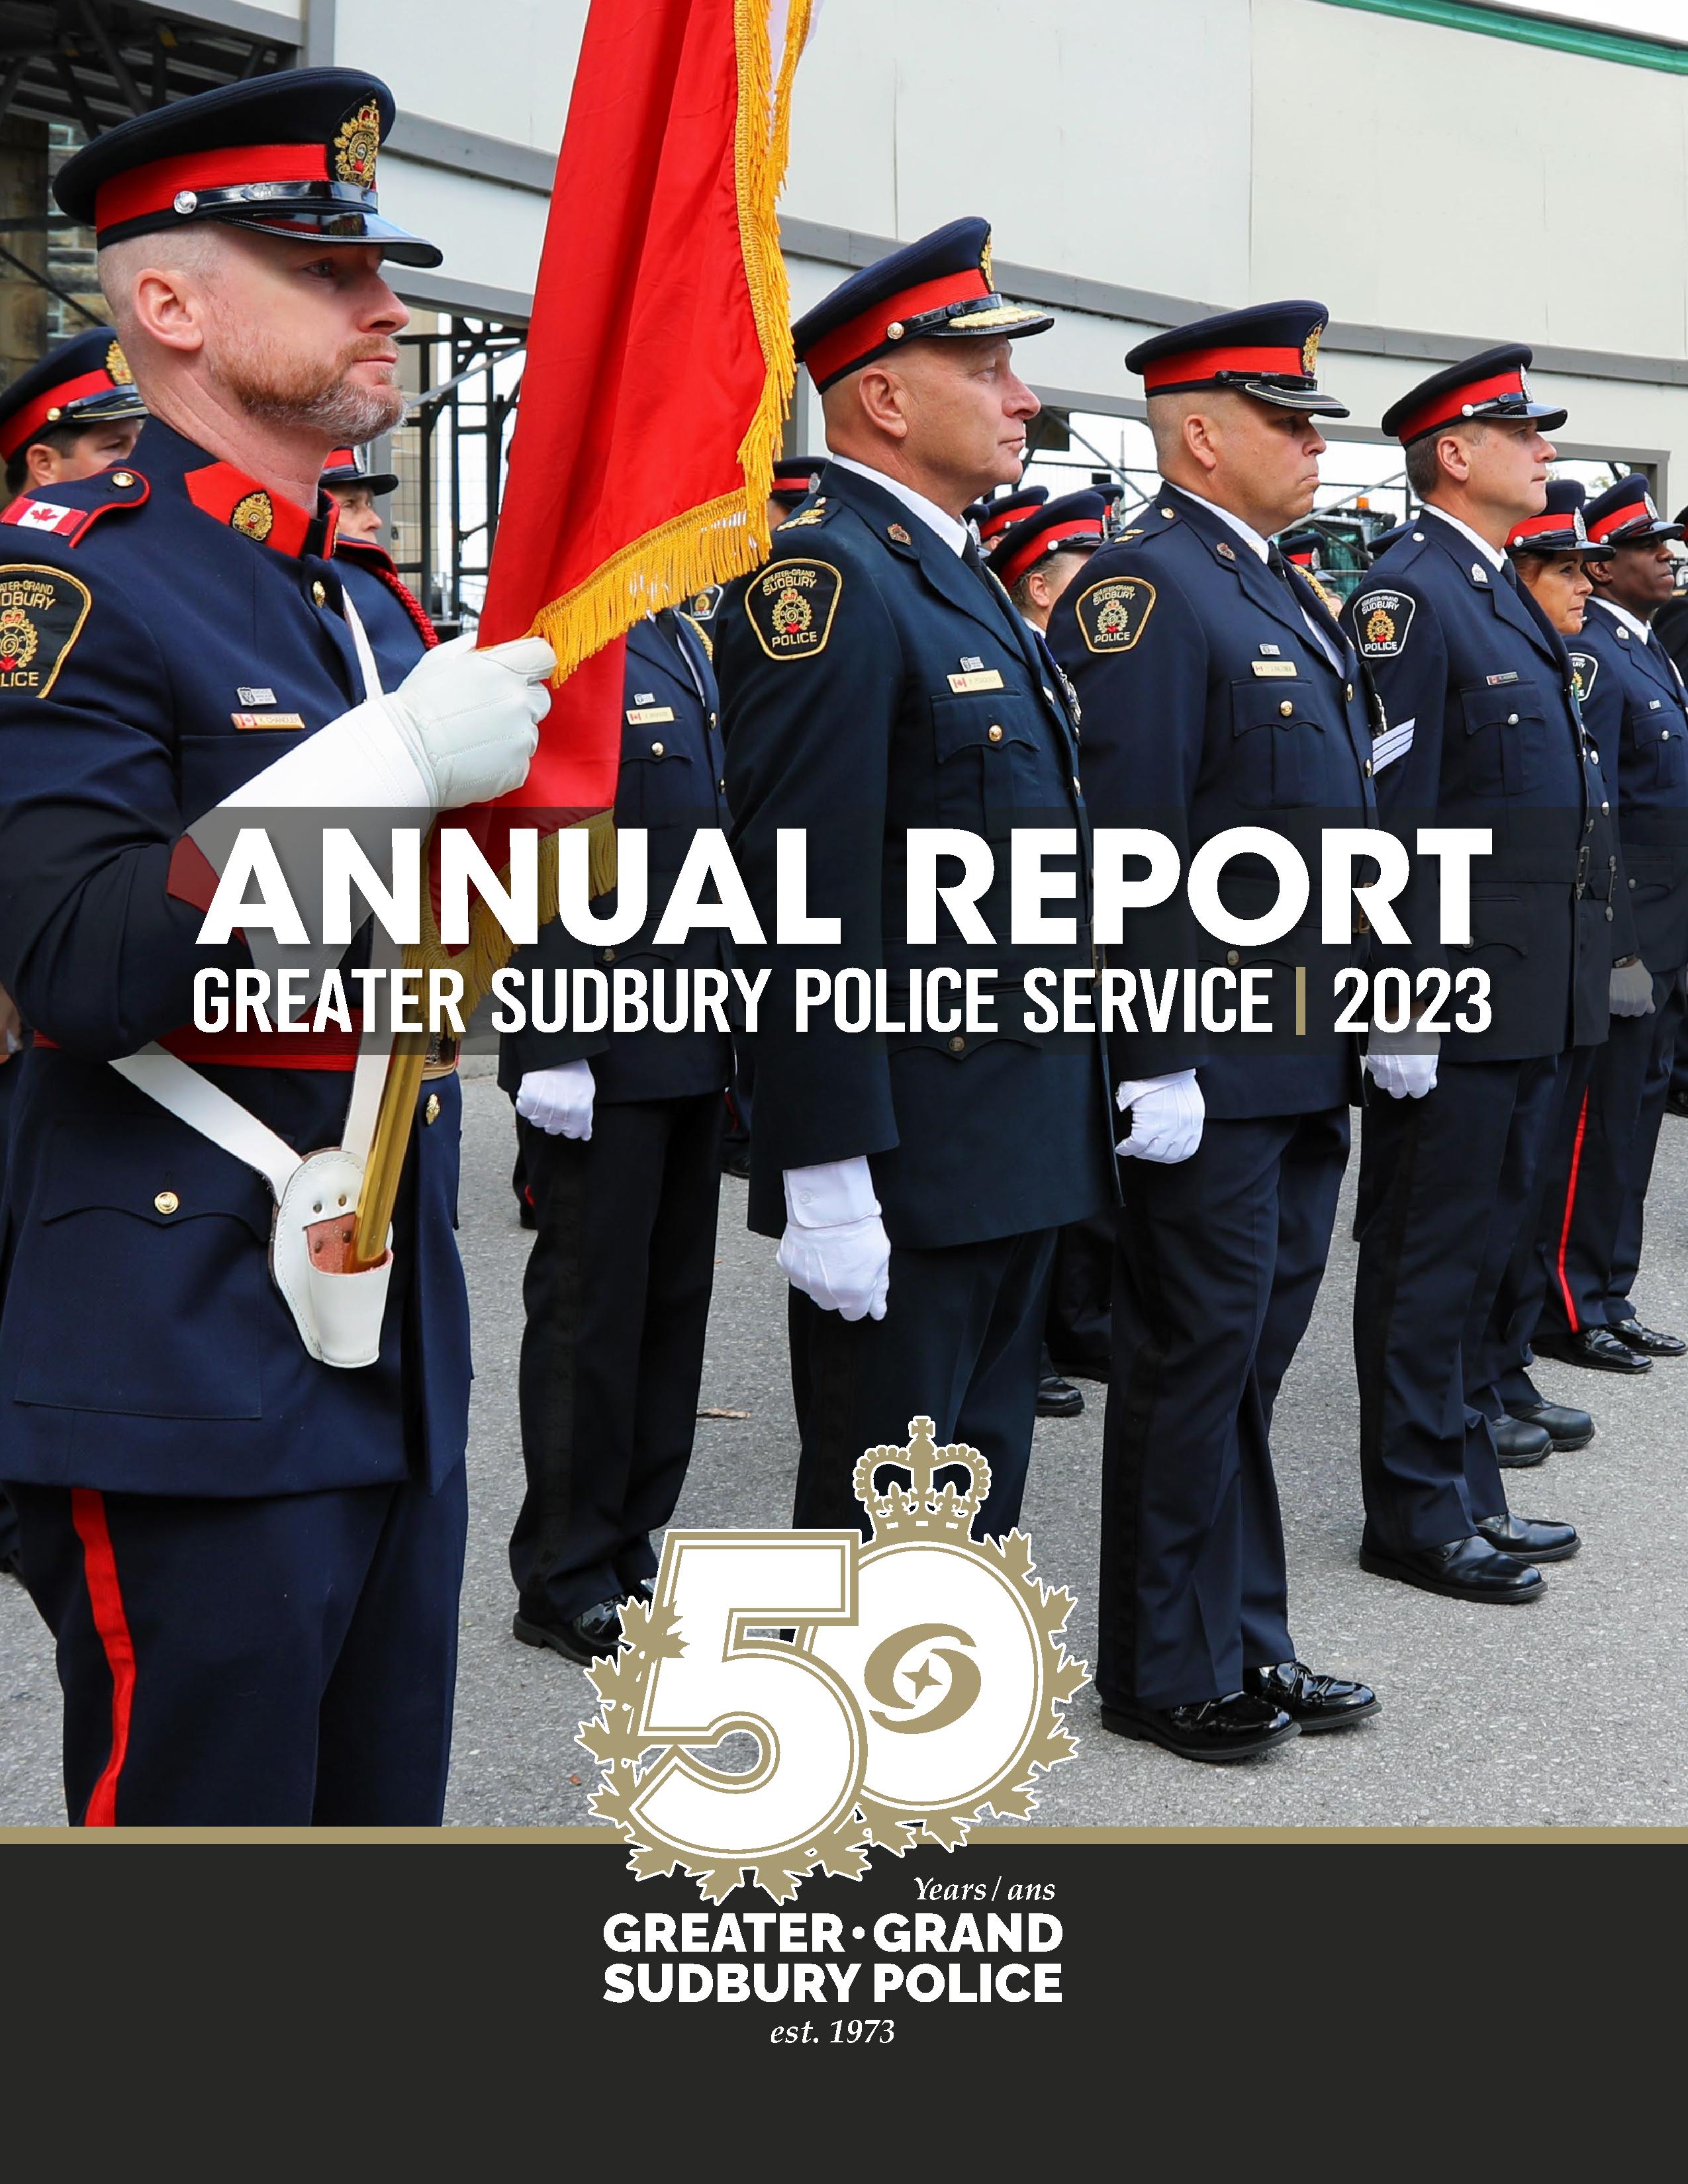 2023 annual report